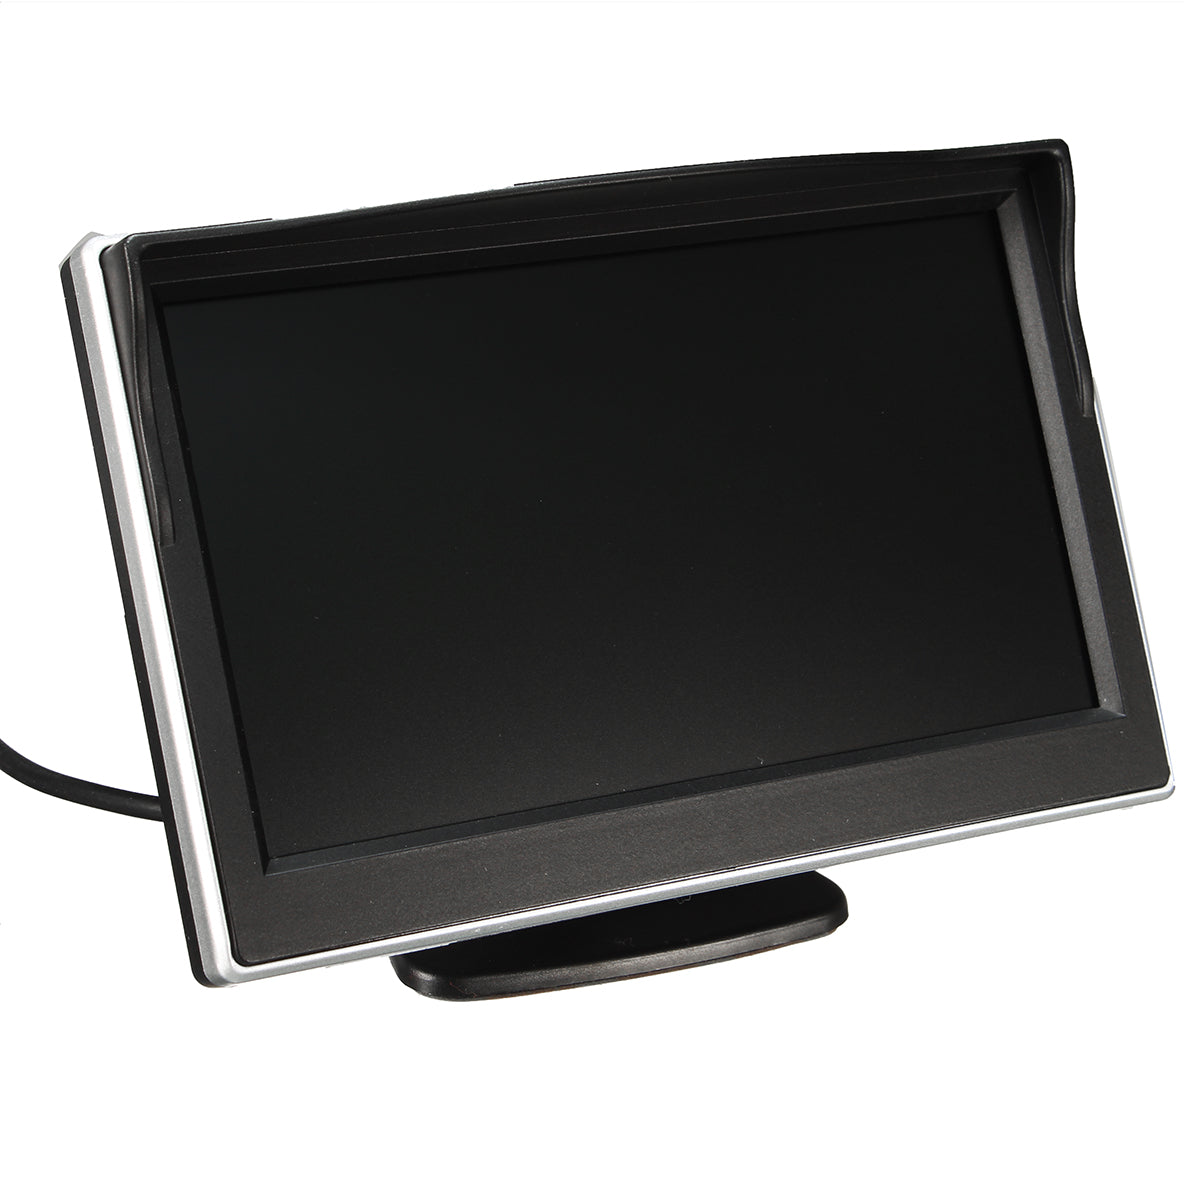 5" TFT LCD Car Rear View Backup Monitor +Parking Reverse Night Vision Camera - Auto GoShop